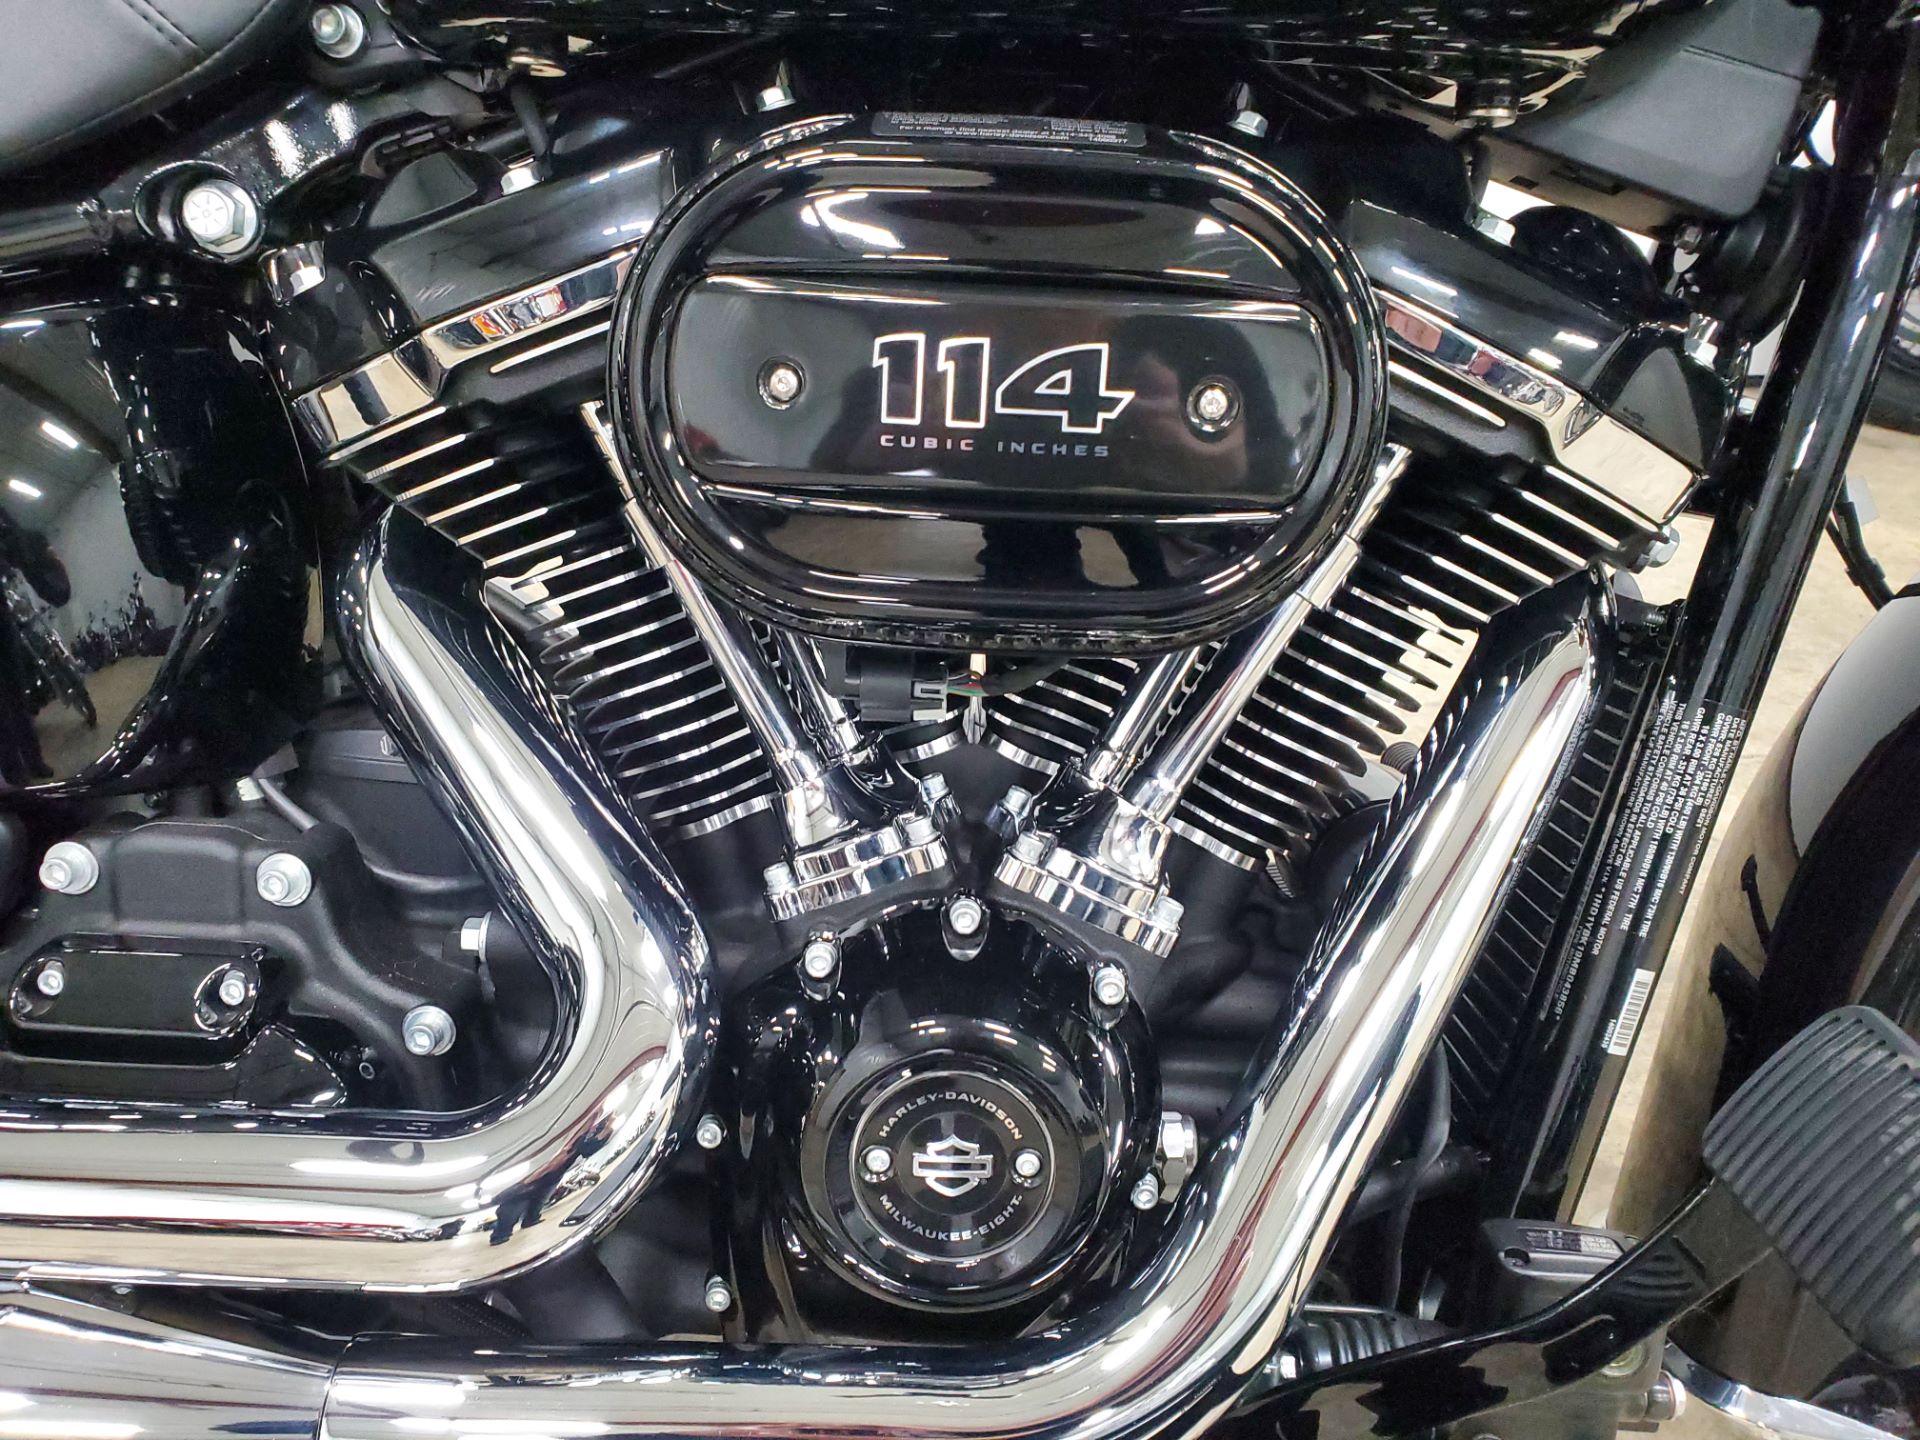 2021 Harley-Davidson Heritage Classic 114 in Sandusky, Ohio - Photo 2